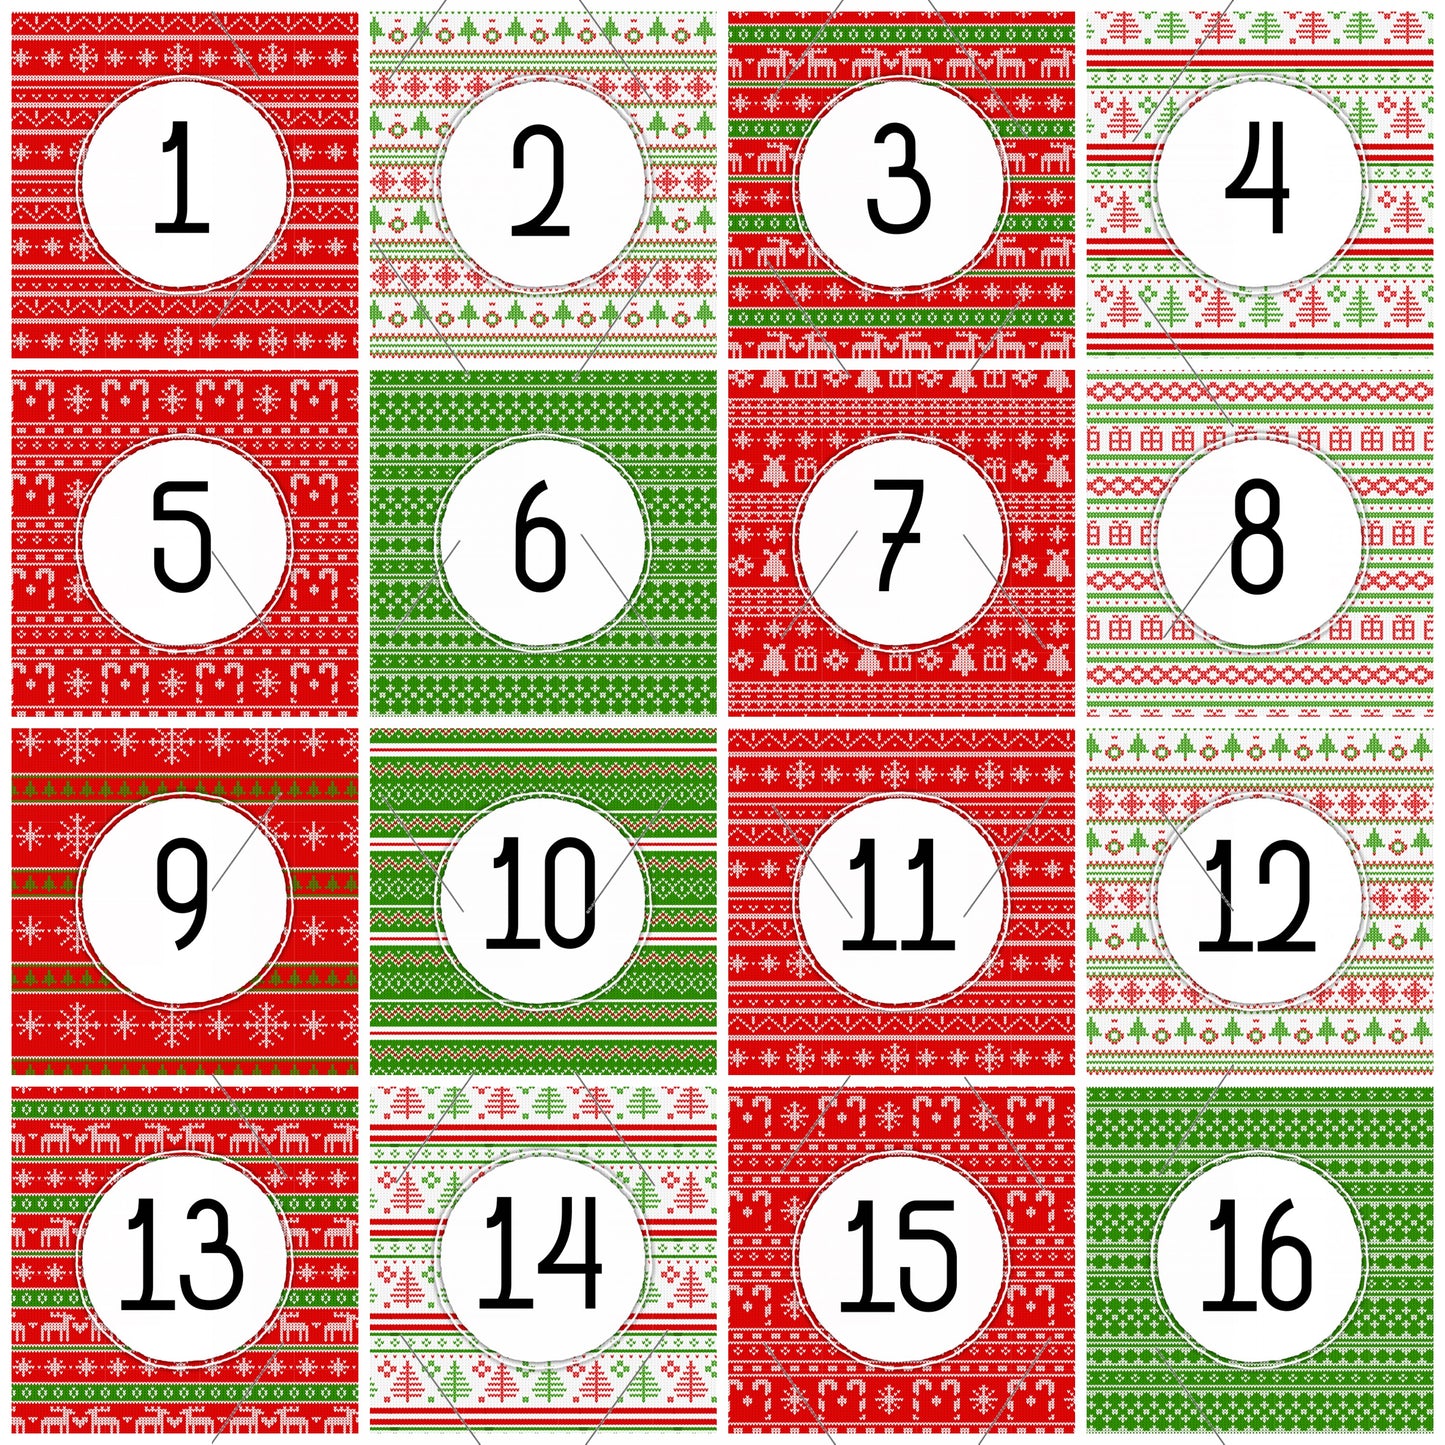 READY TO PRINT:  Advent Calendar - Christmas Sweater